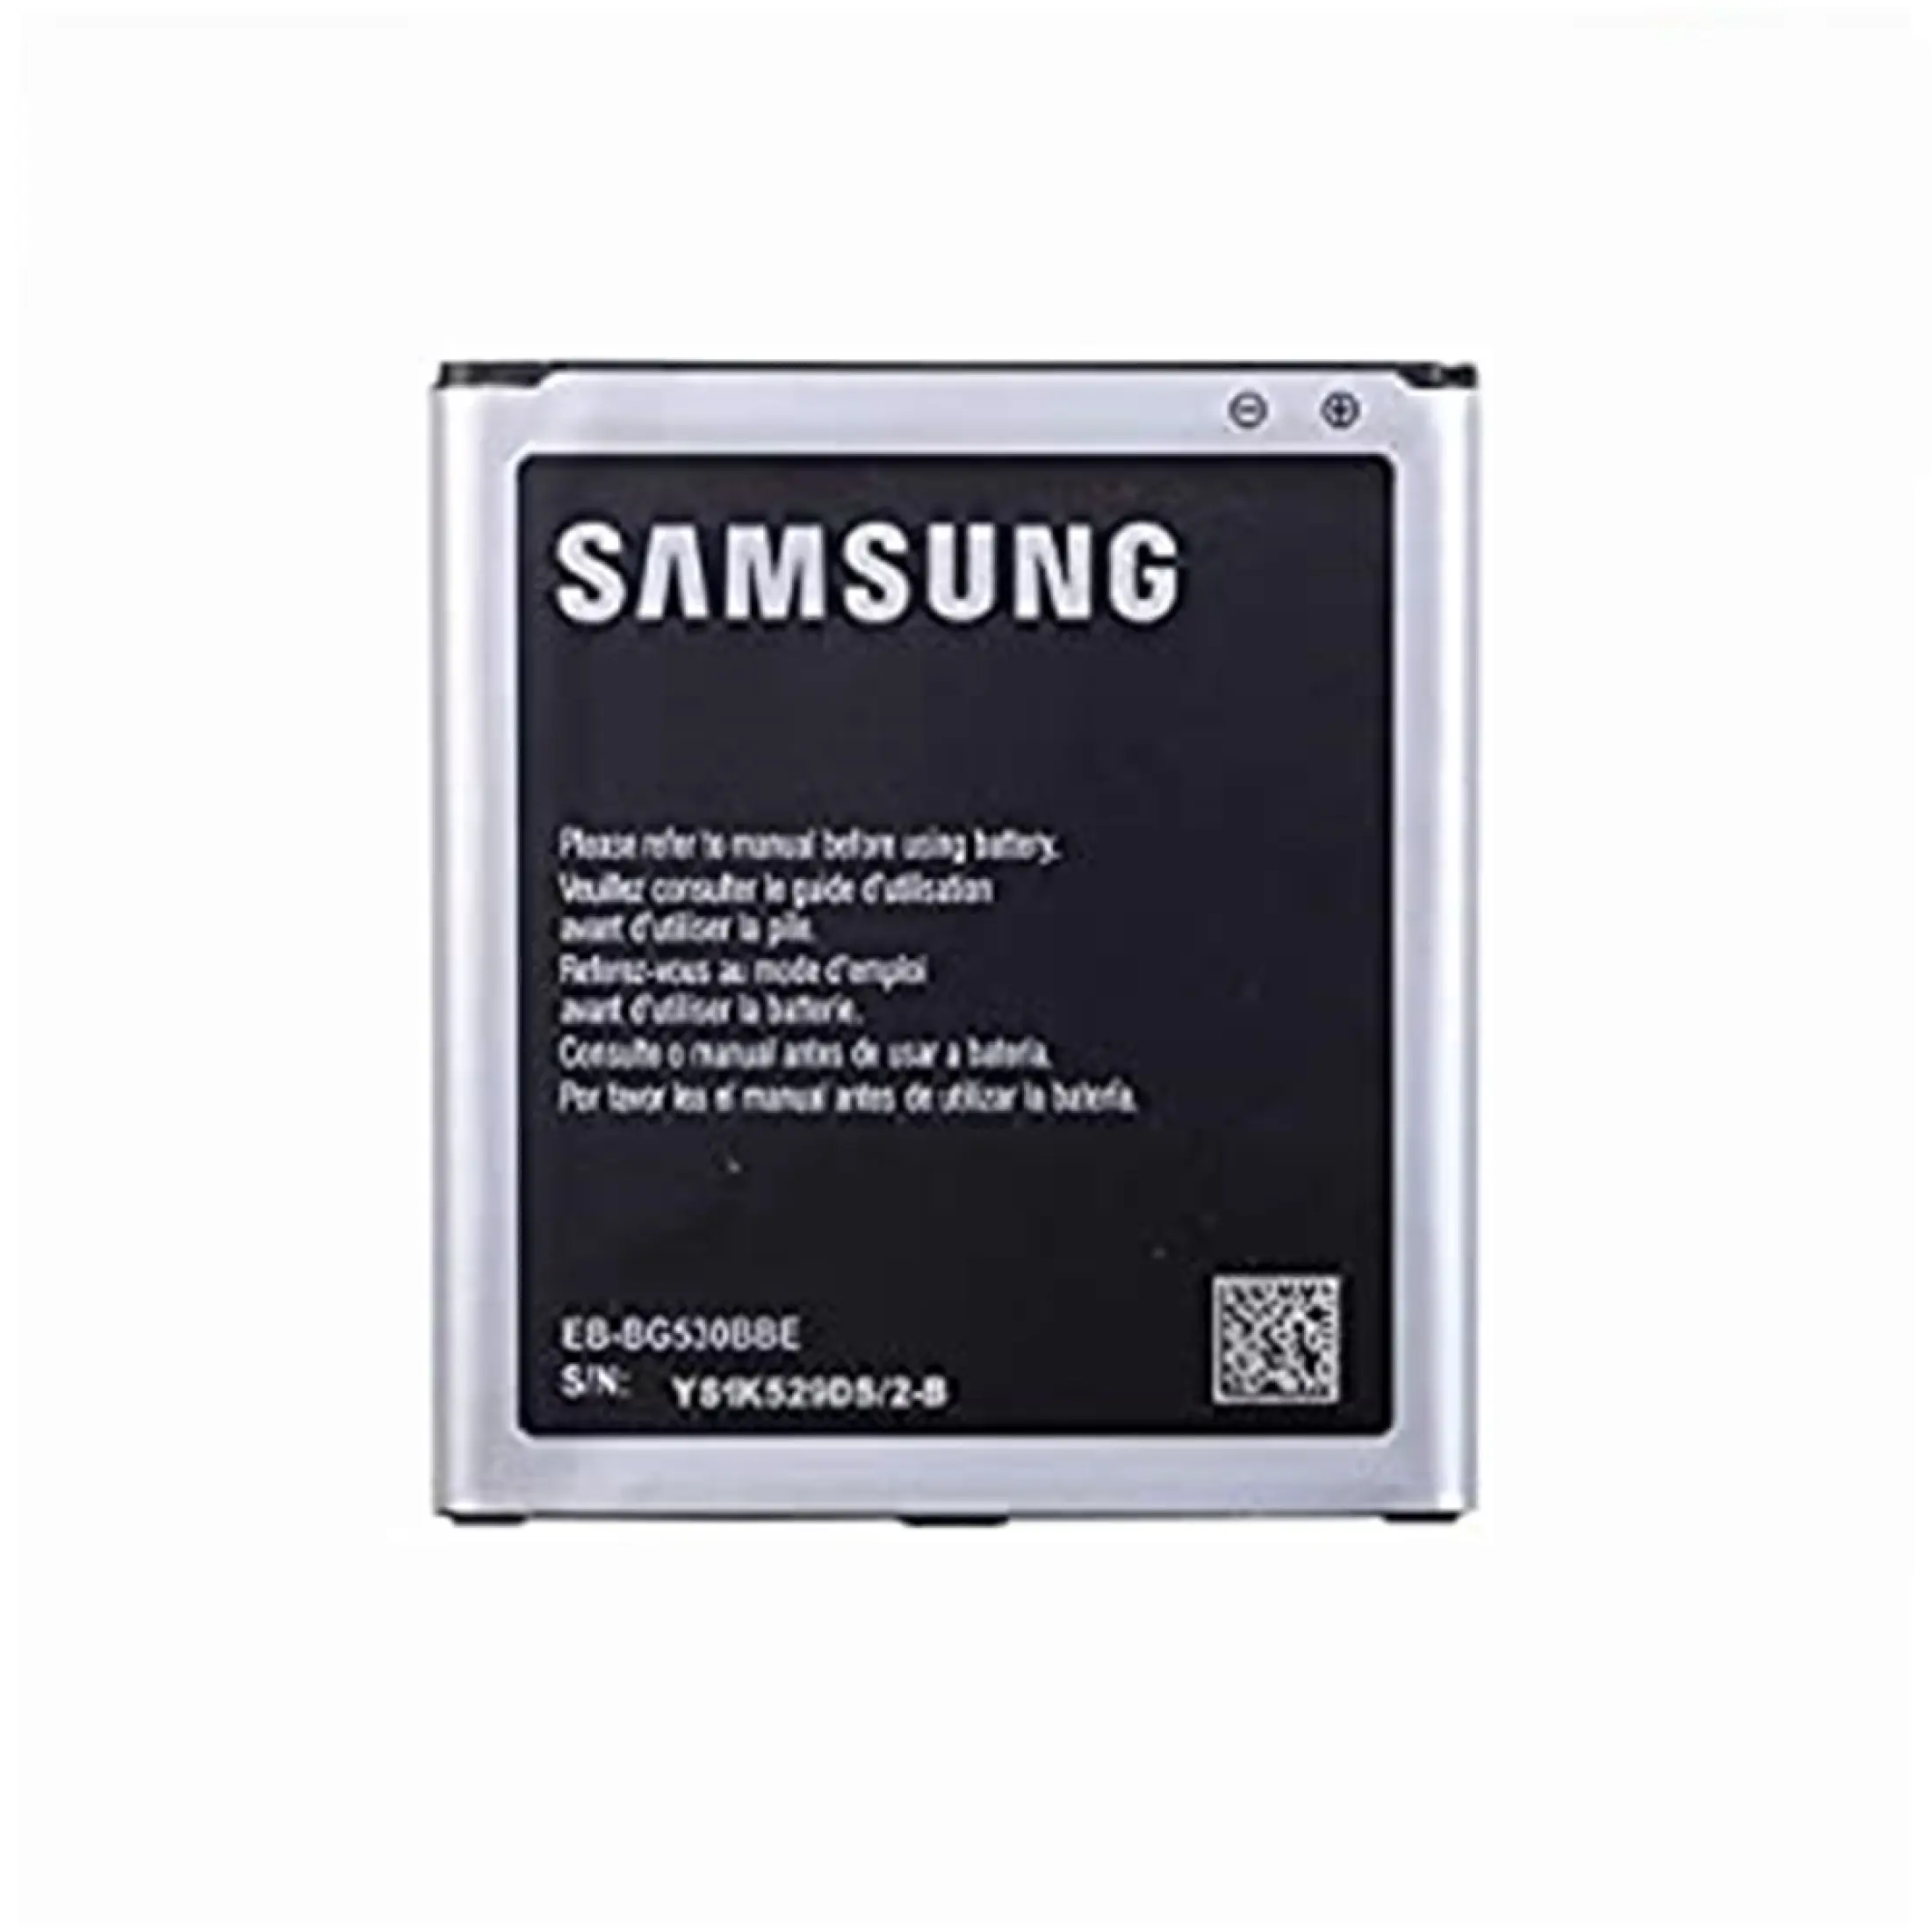 Samsung Baterai Battery Galaxy J2 Prime G532 Original Kapasitas 2600mah Batre Samsung J2 Prime Batrai Samsung J2 Prime Batre Hp Samsung J2 Prime Baterai Samsung